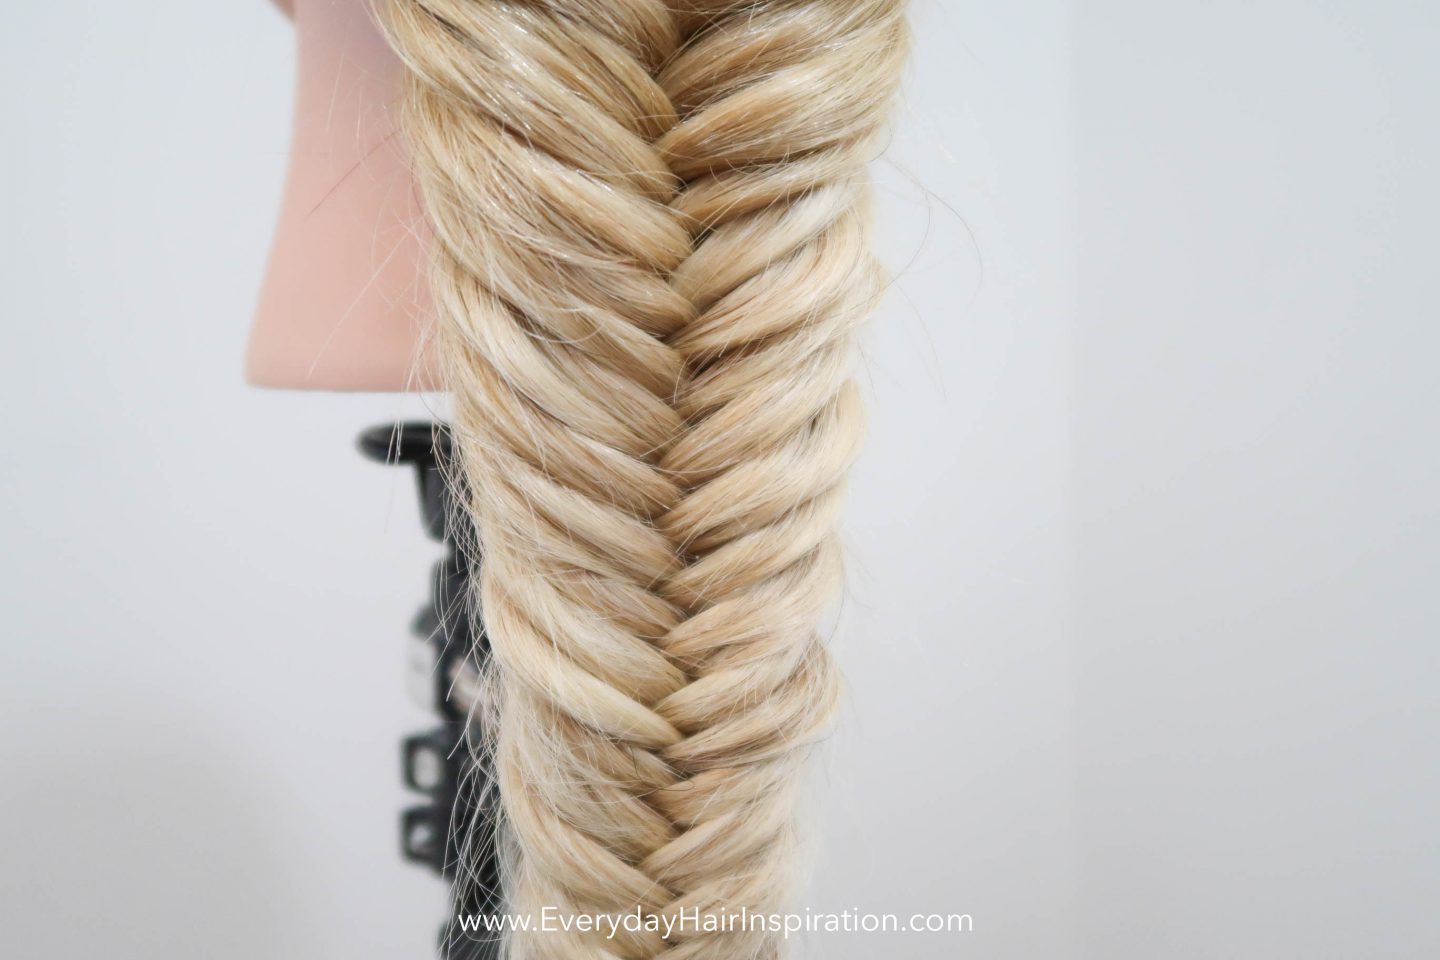 How To Fishtail Braid Everyday Hair Inspiration Fishtail Braid